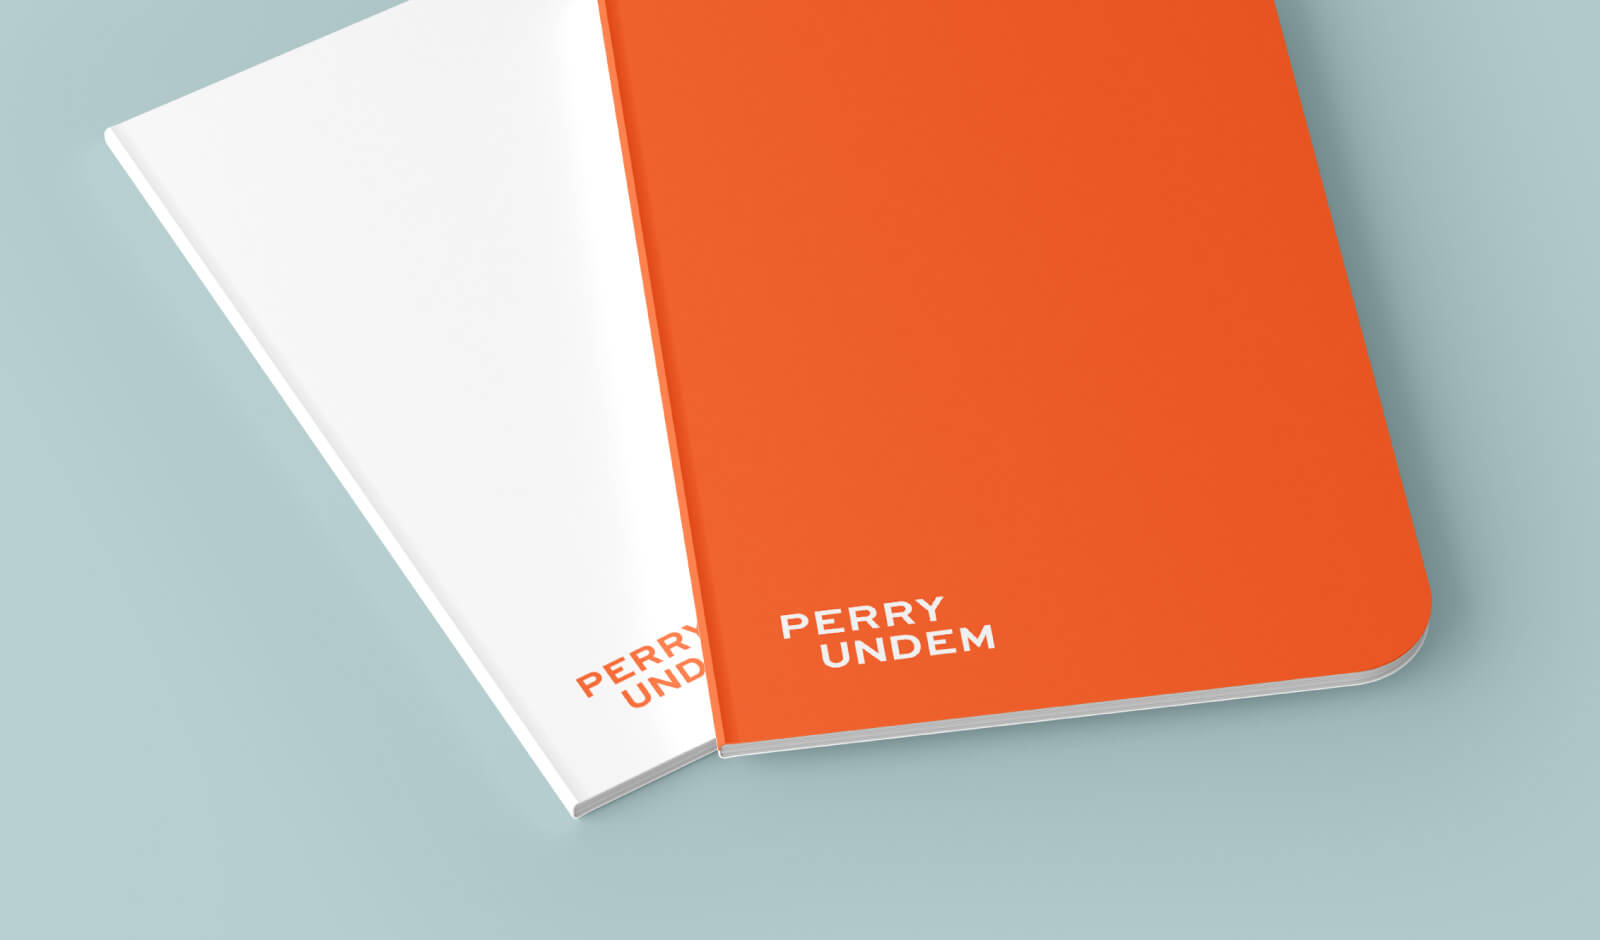 PerryUndem logo and brand design